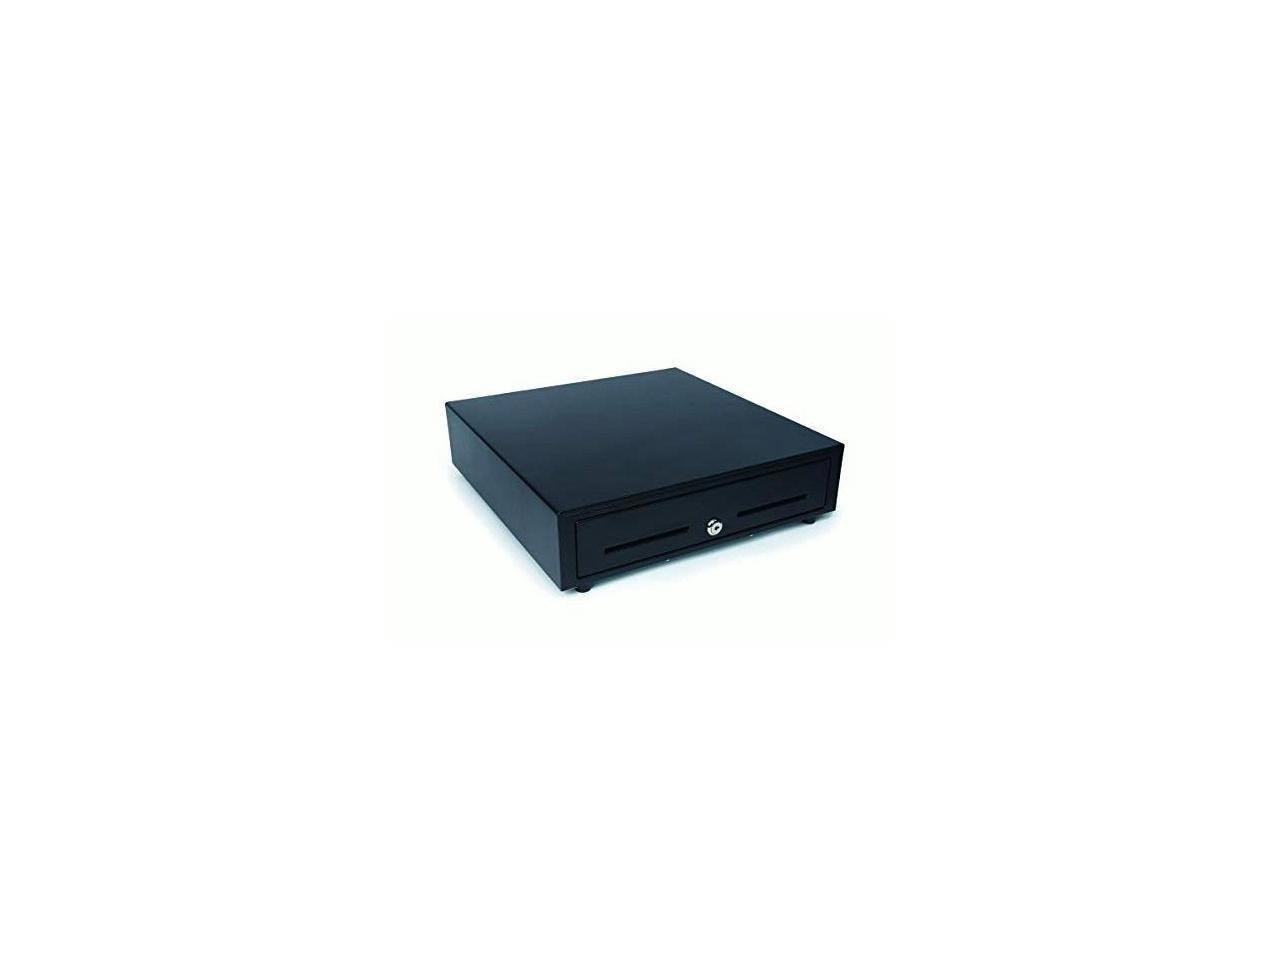 Fujifilm Cd3-1616Bk55-S2 Cash Drawer Black Printer Driven 5Bill-5Coin